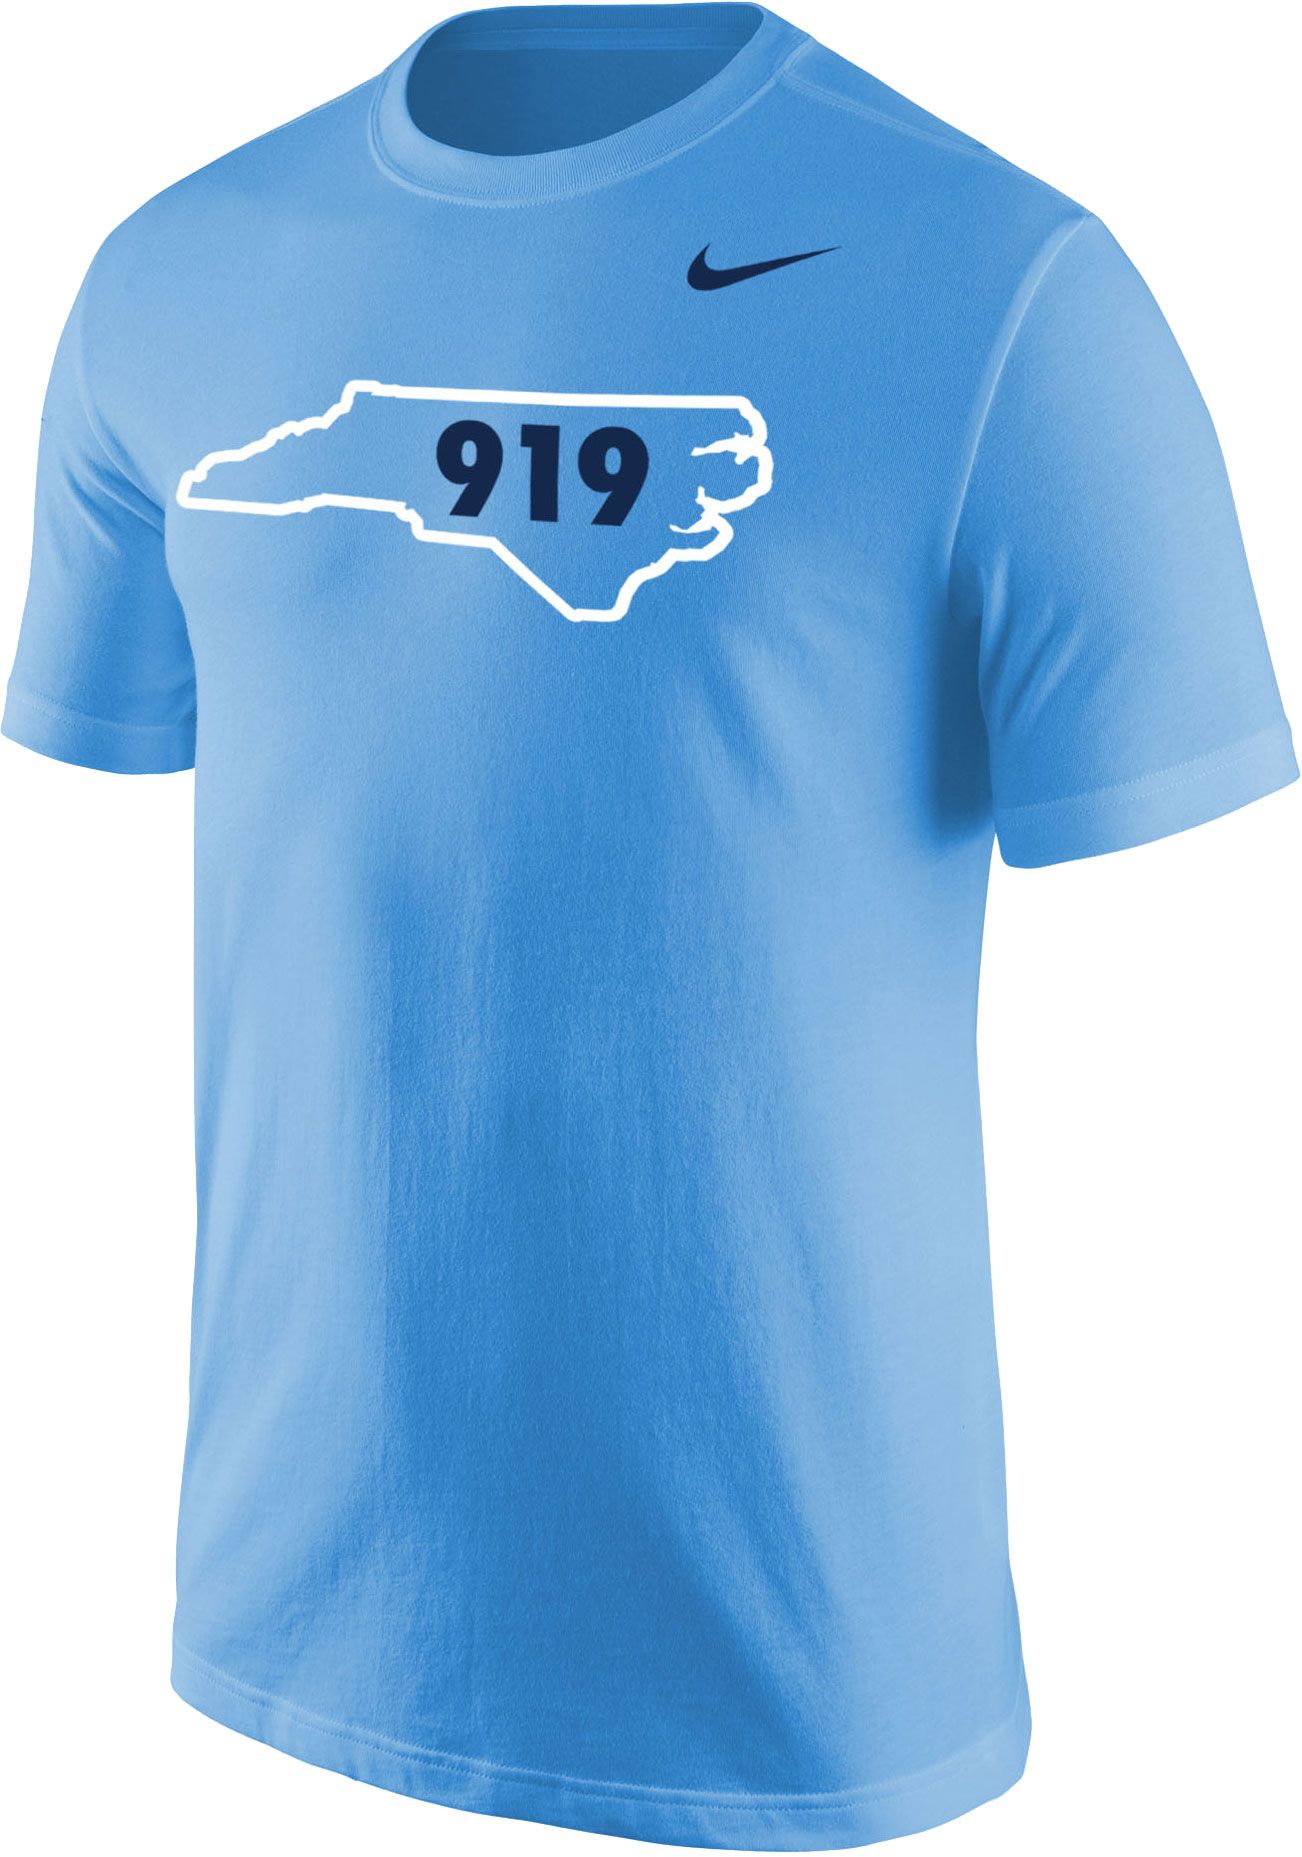 Nike 919 Area Code T-Shirt | DICK'S 